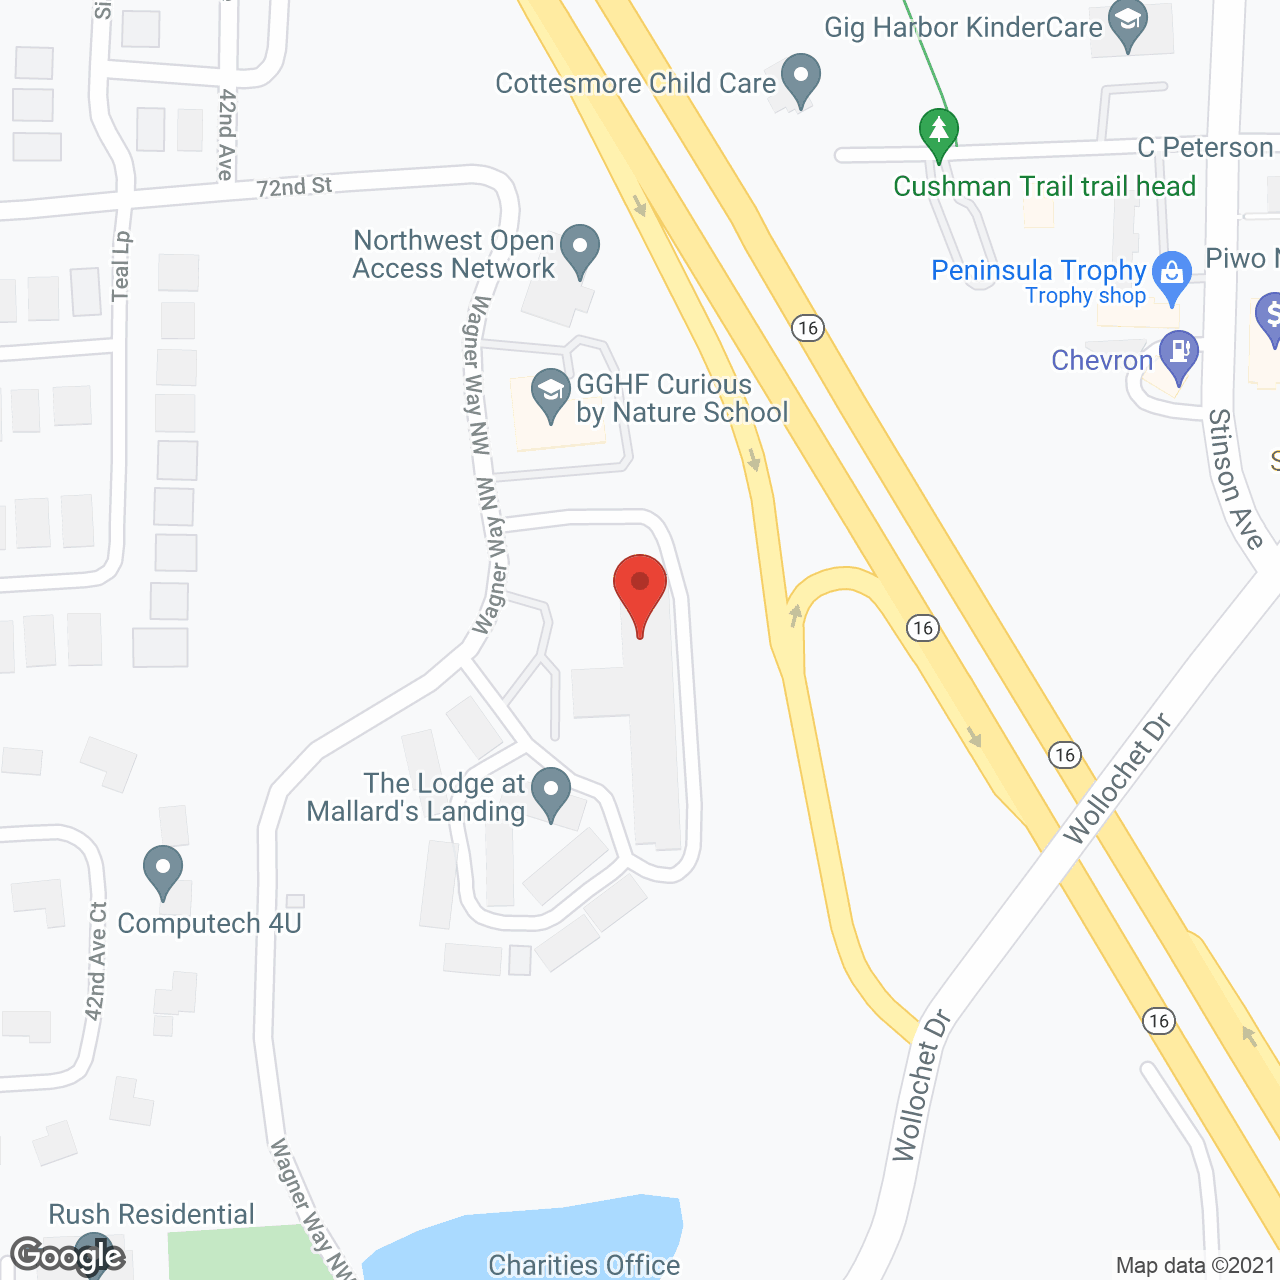 The Lodge at Mallard's Landing in google map